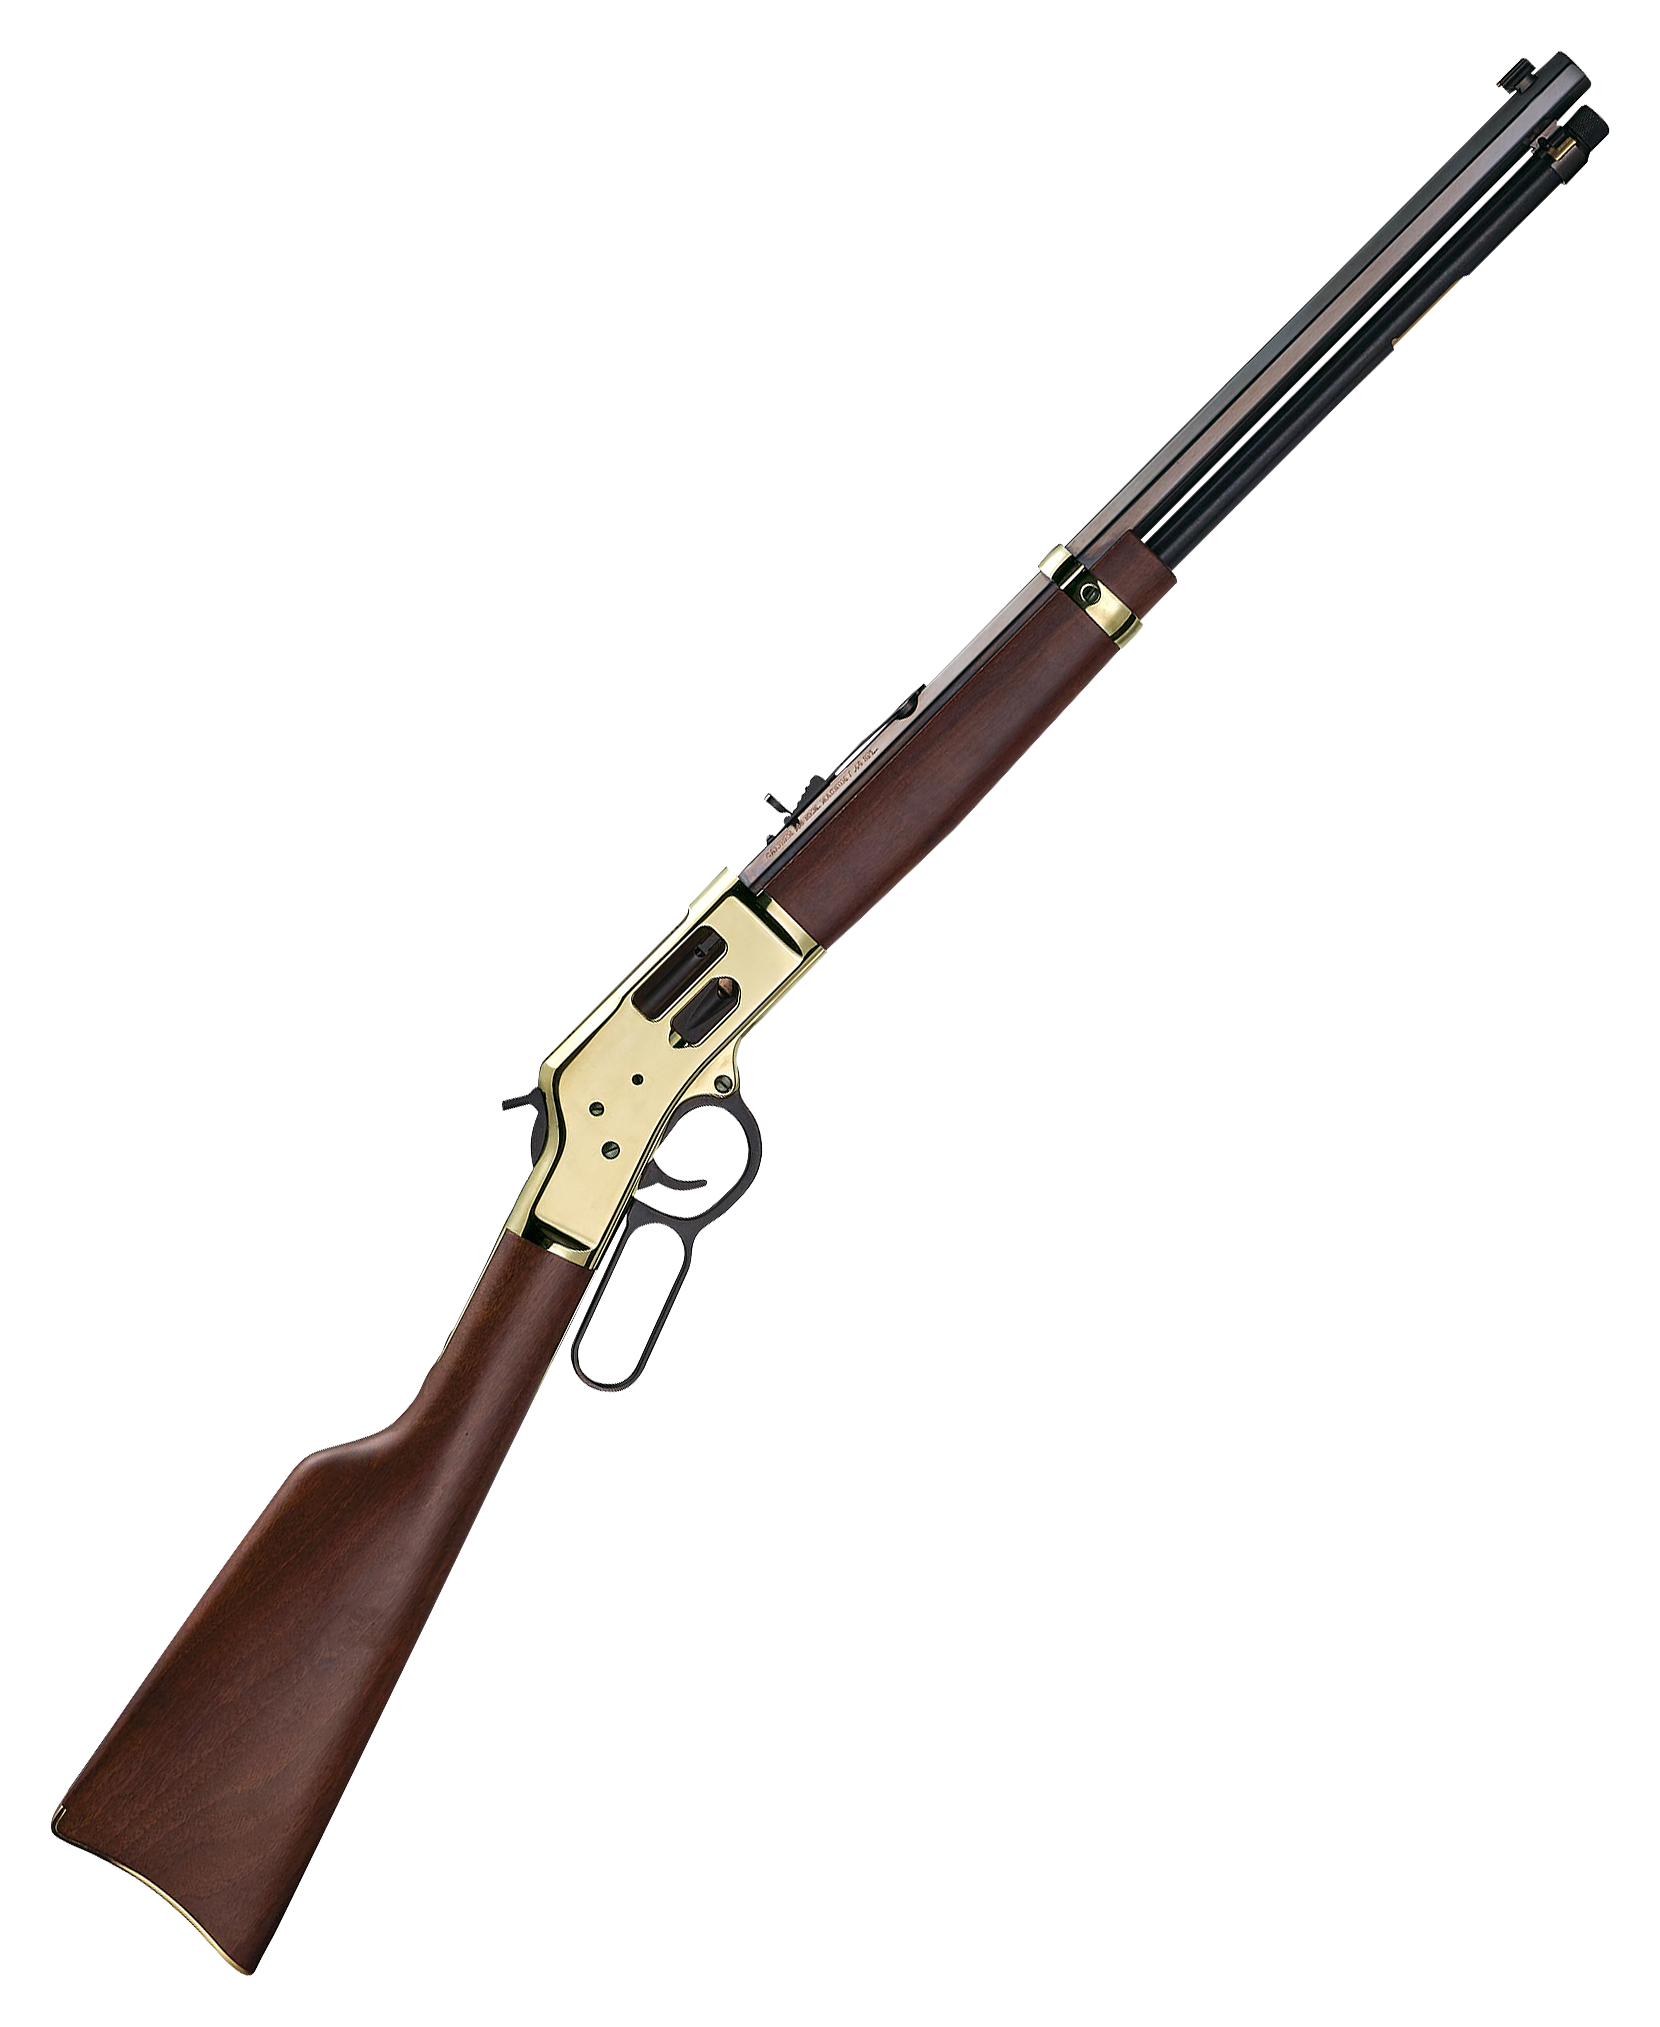 Henry Big Boy Brass Side Gate Polished Hardened Brass Lever Action Rifle - 44 Magnum - 20in - Brown -  H006G